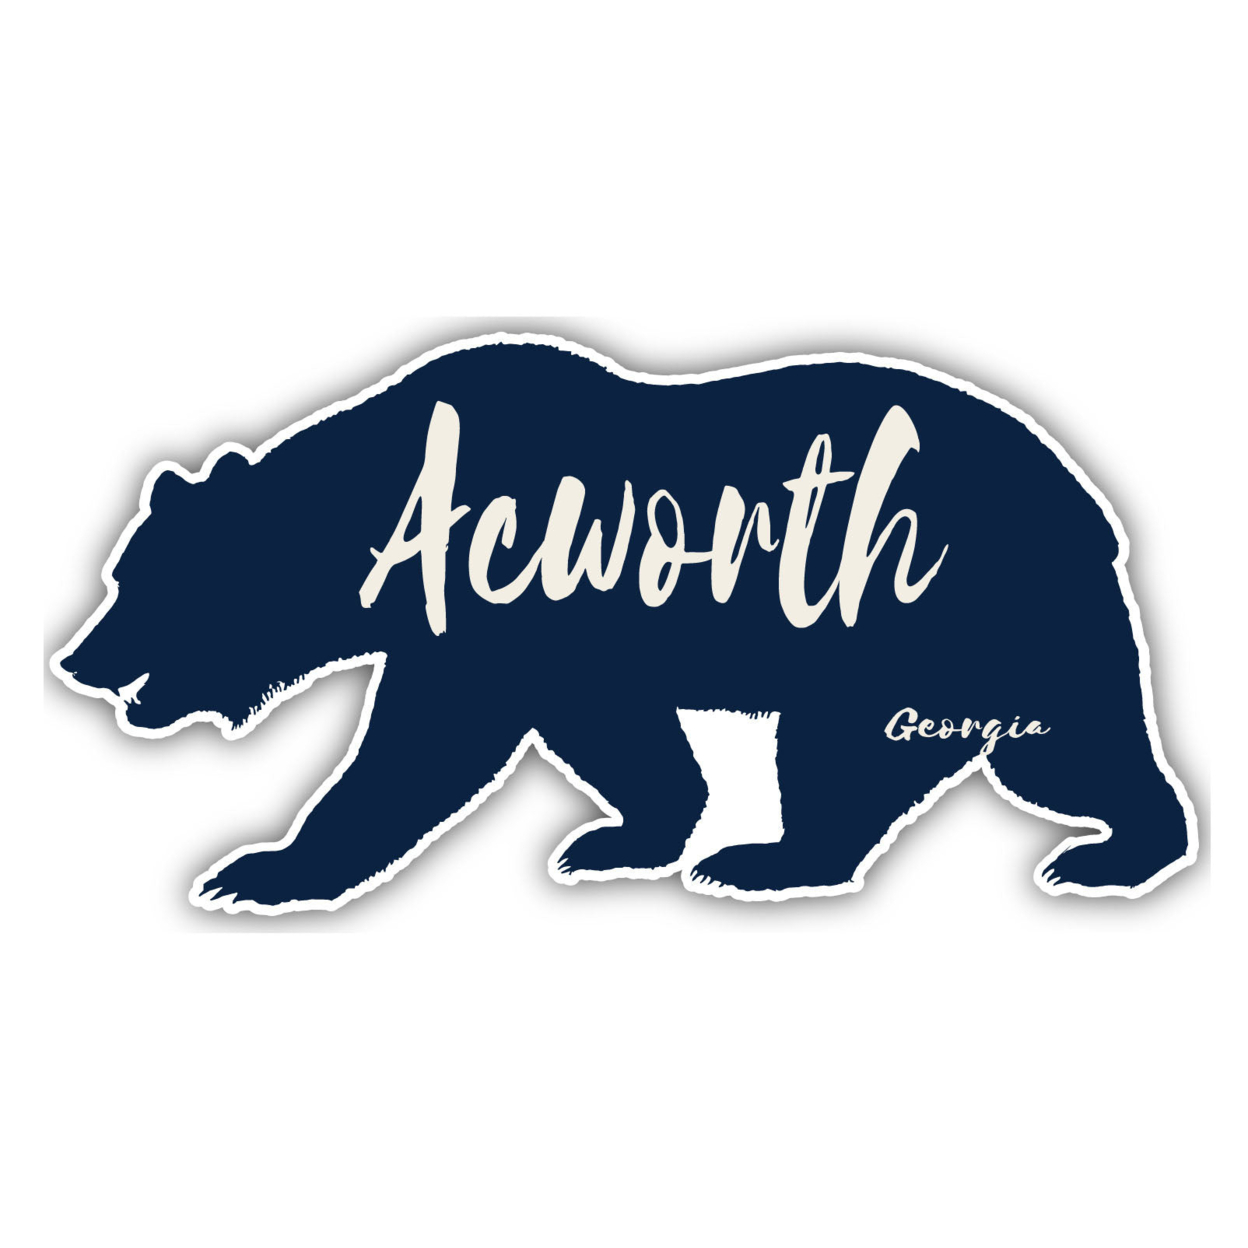 Acworth Georgia Souvenir Decorative Stickers (Choose Theme And Size) - 4-Pack, 2-Inch, Bear